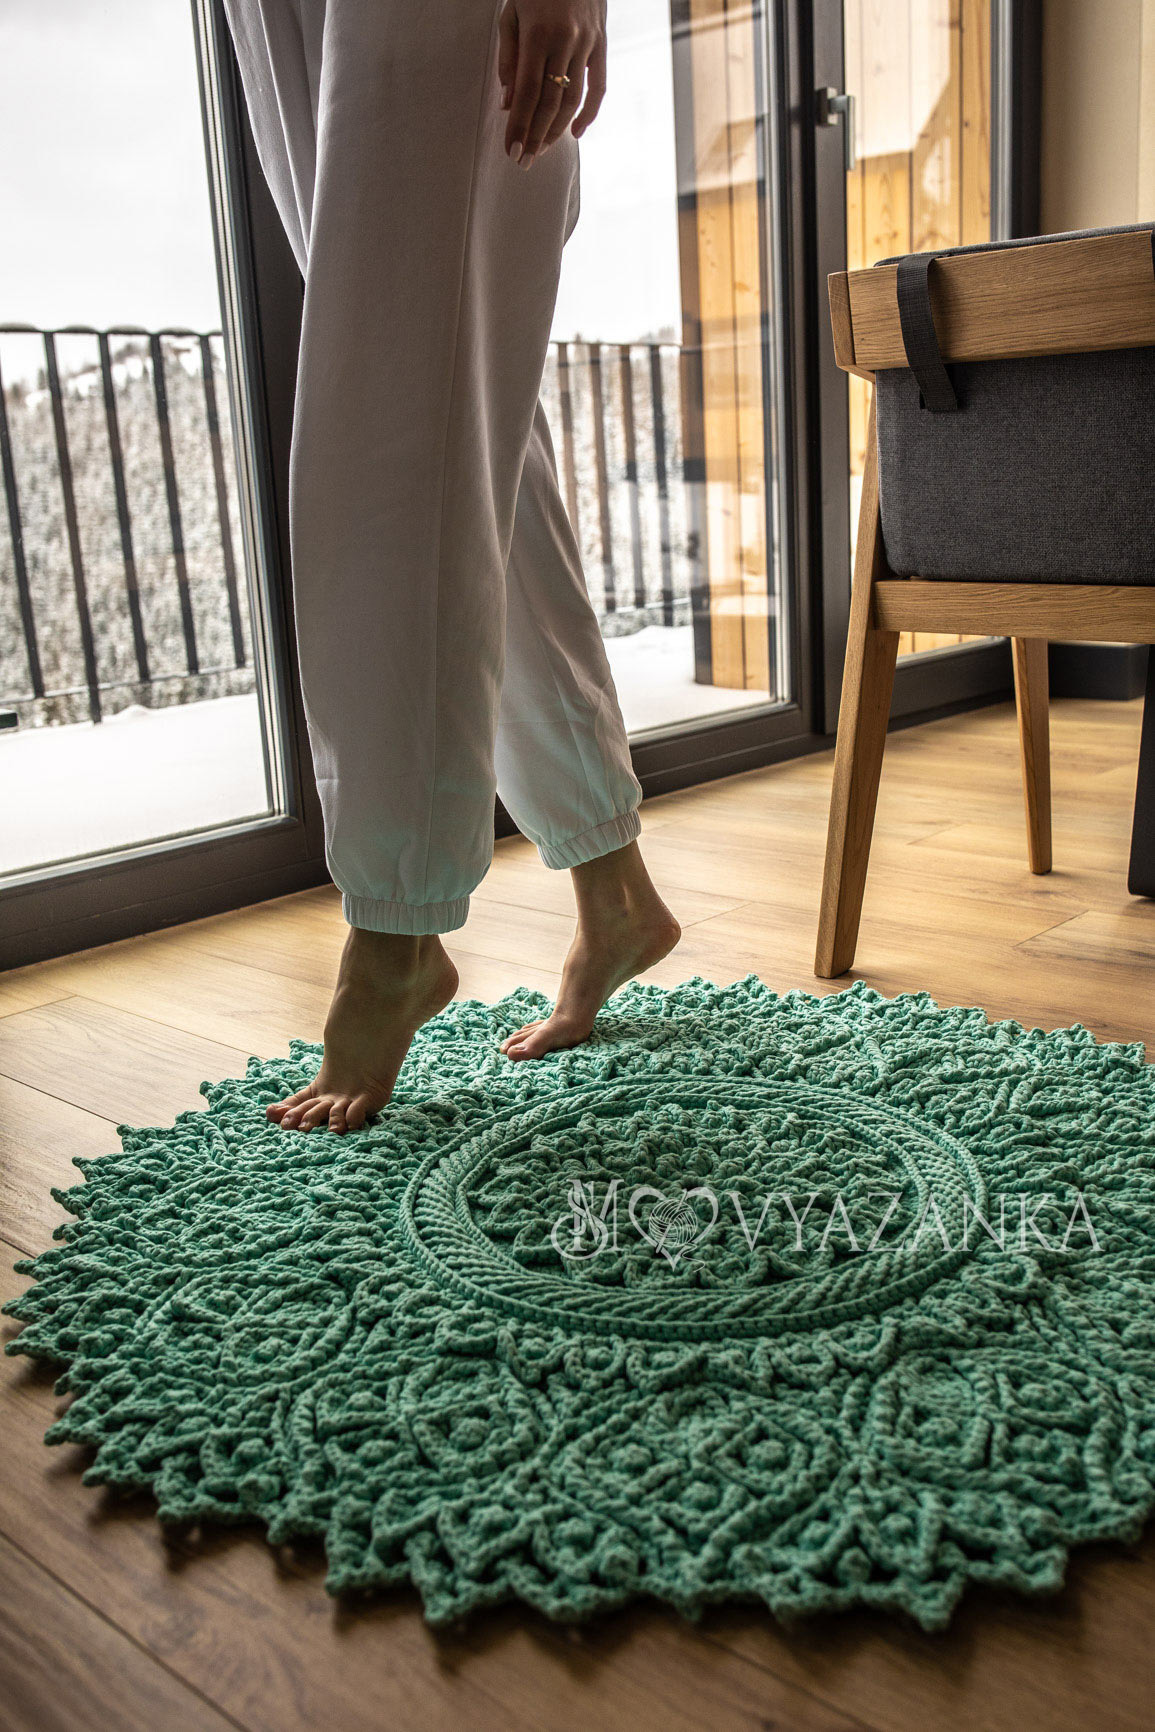 Crochet rug "Lace Blizzard" 105x105 cm., handmade, 100% cotton